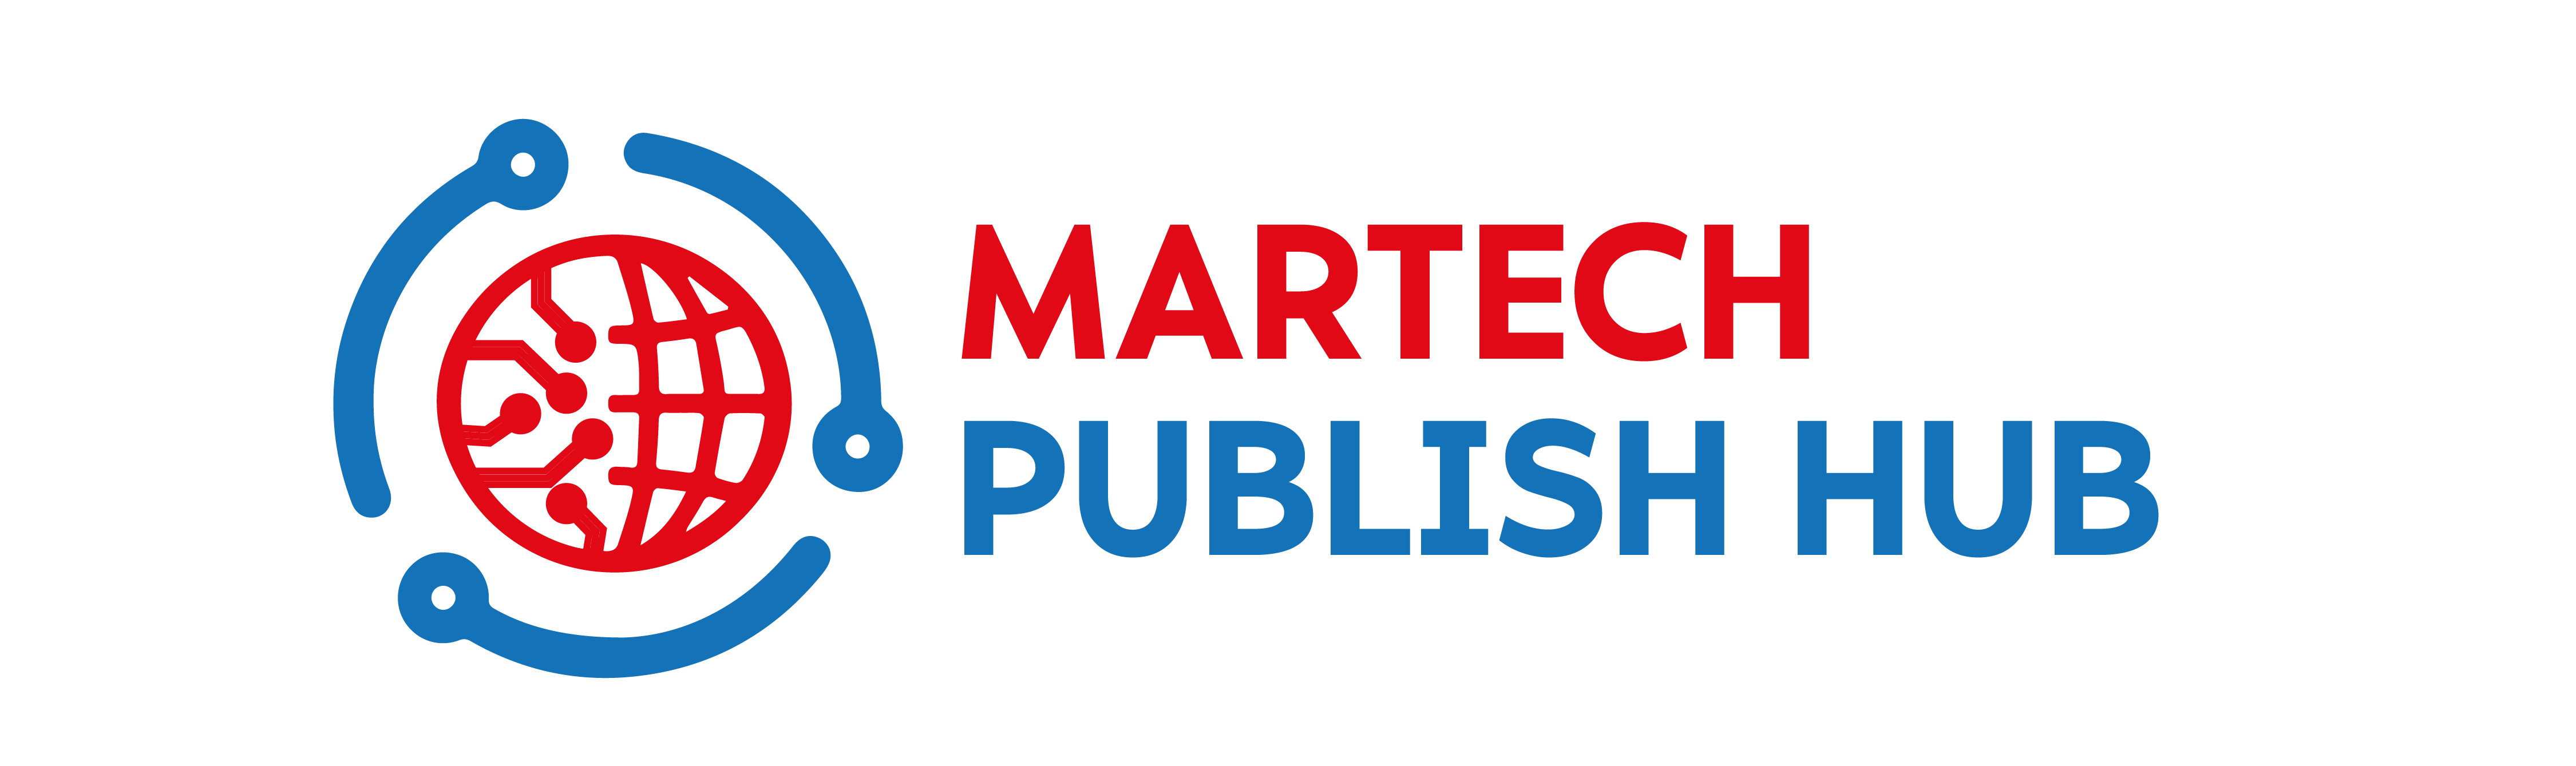 MarTech Publish Hub